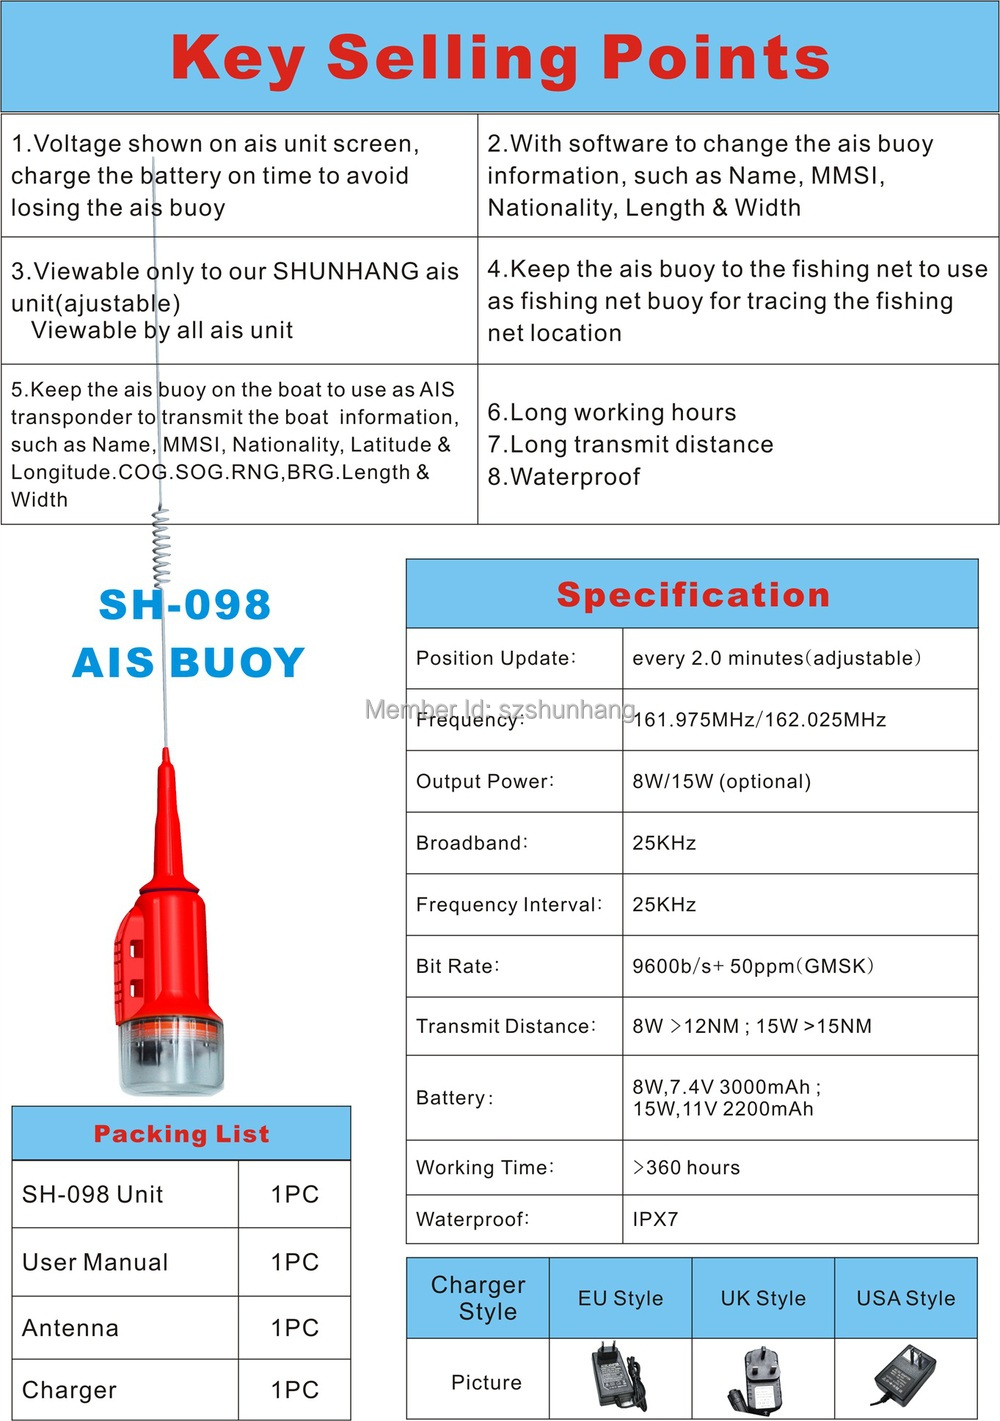 SH-098 user manual 20150512 small size.jpg